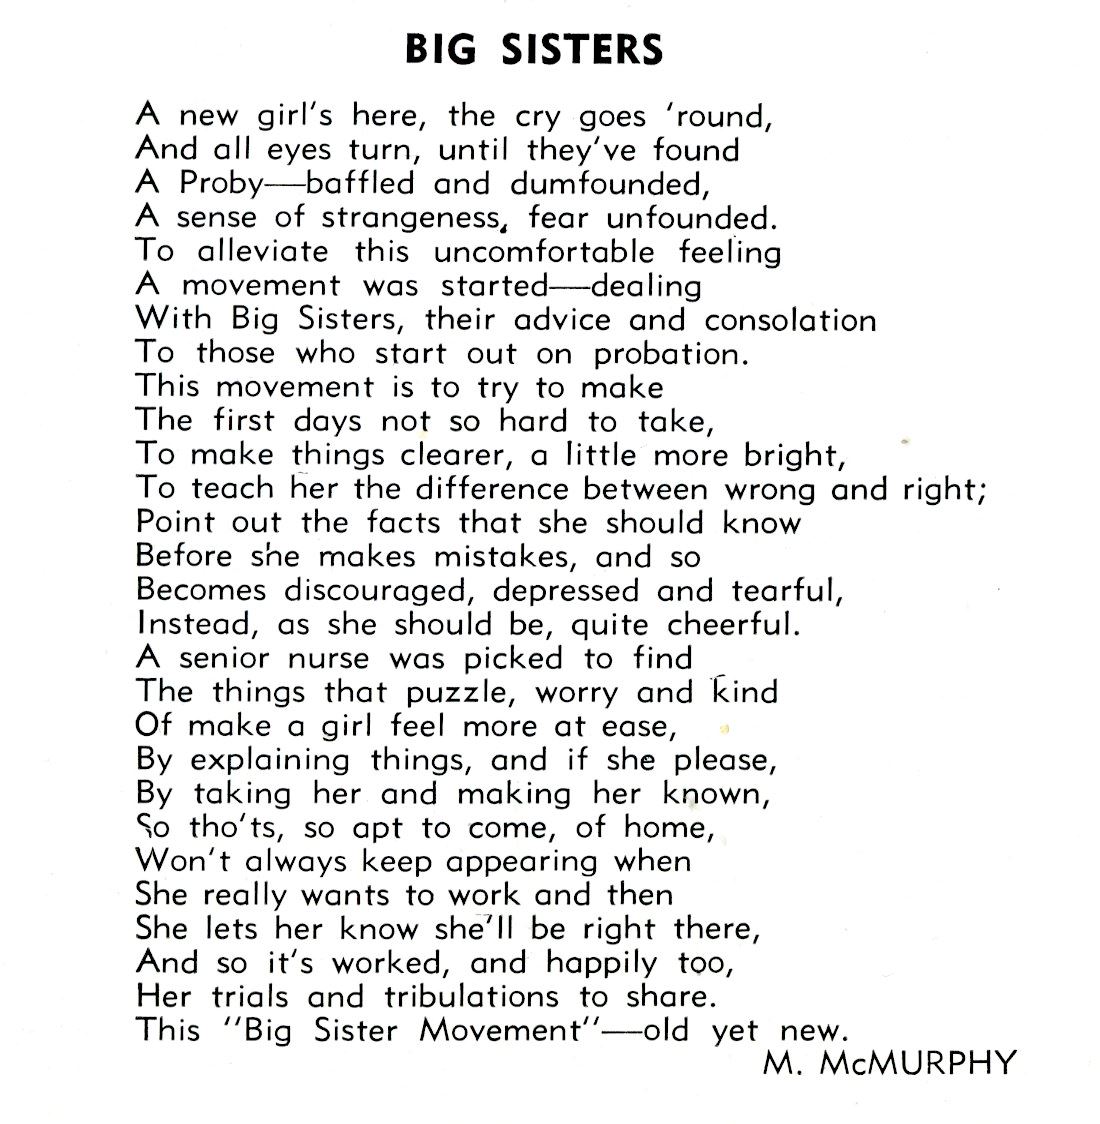 Poem by M. McMurphy in Nursing Annual